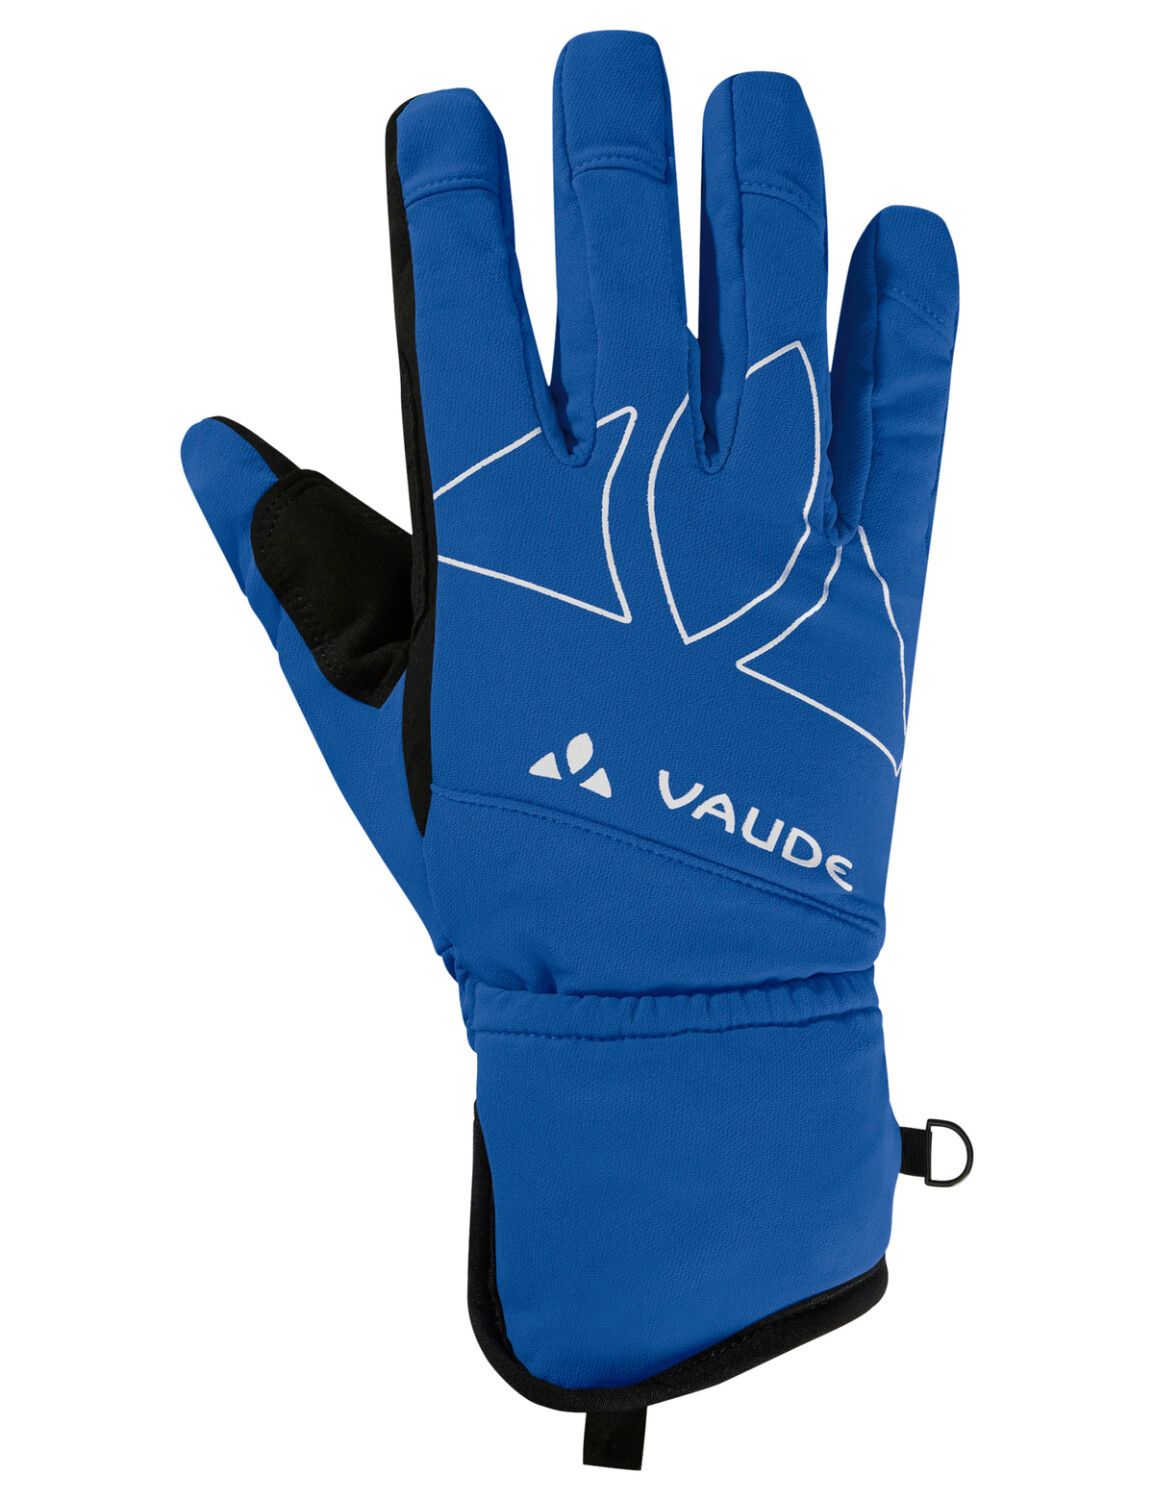 VAUDE La Varella Gloves (Bild 8)